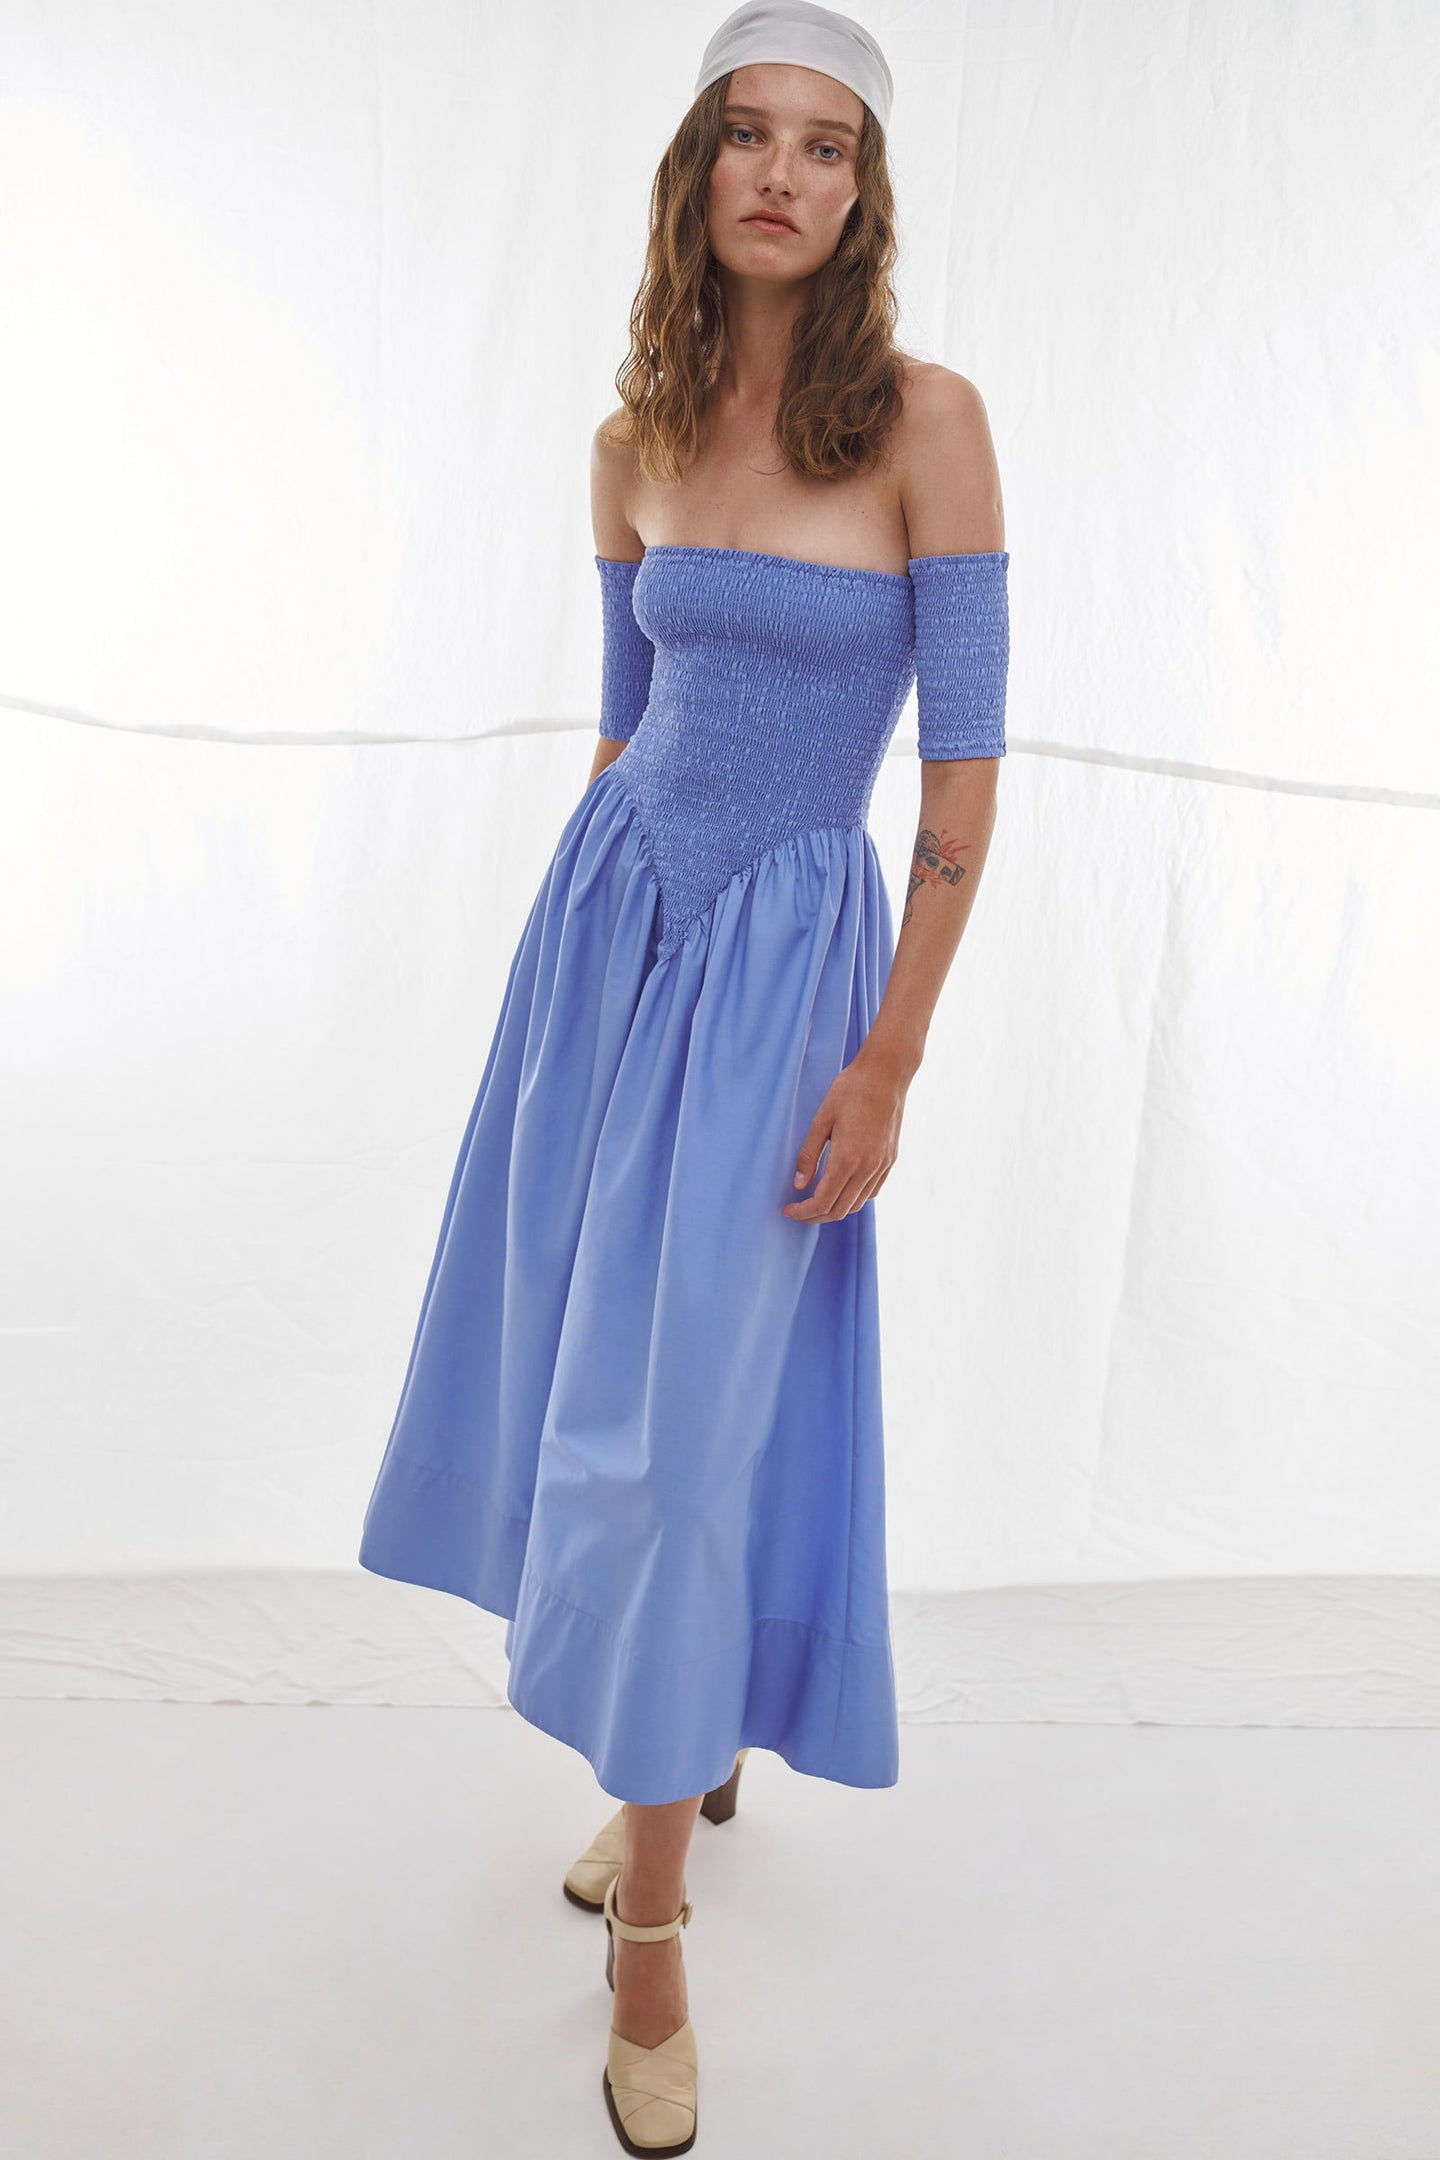 Model in blue Aphrodite dress